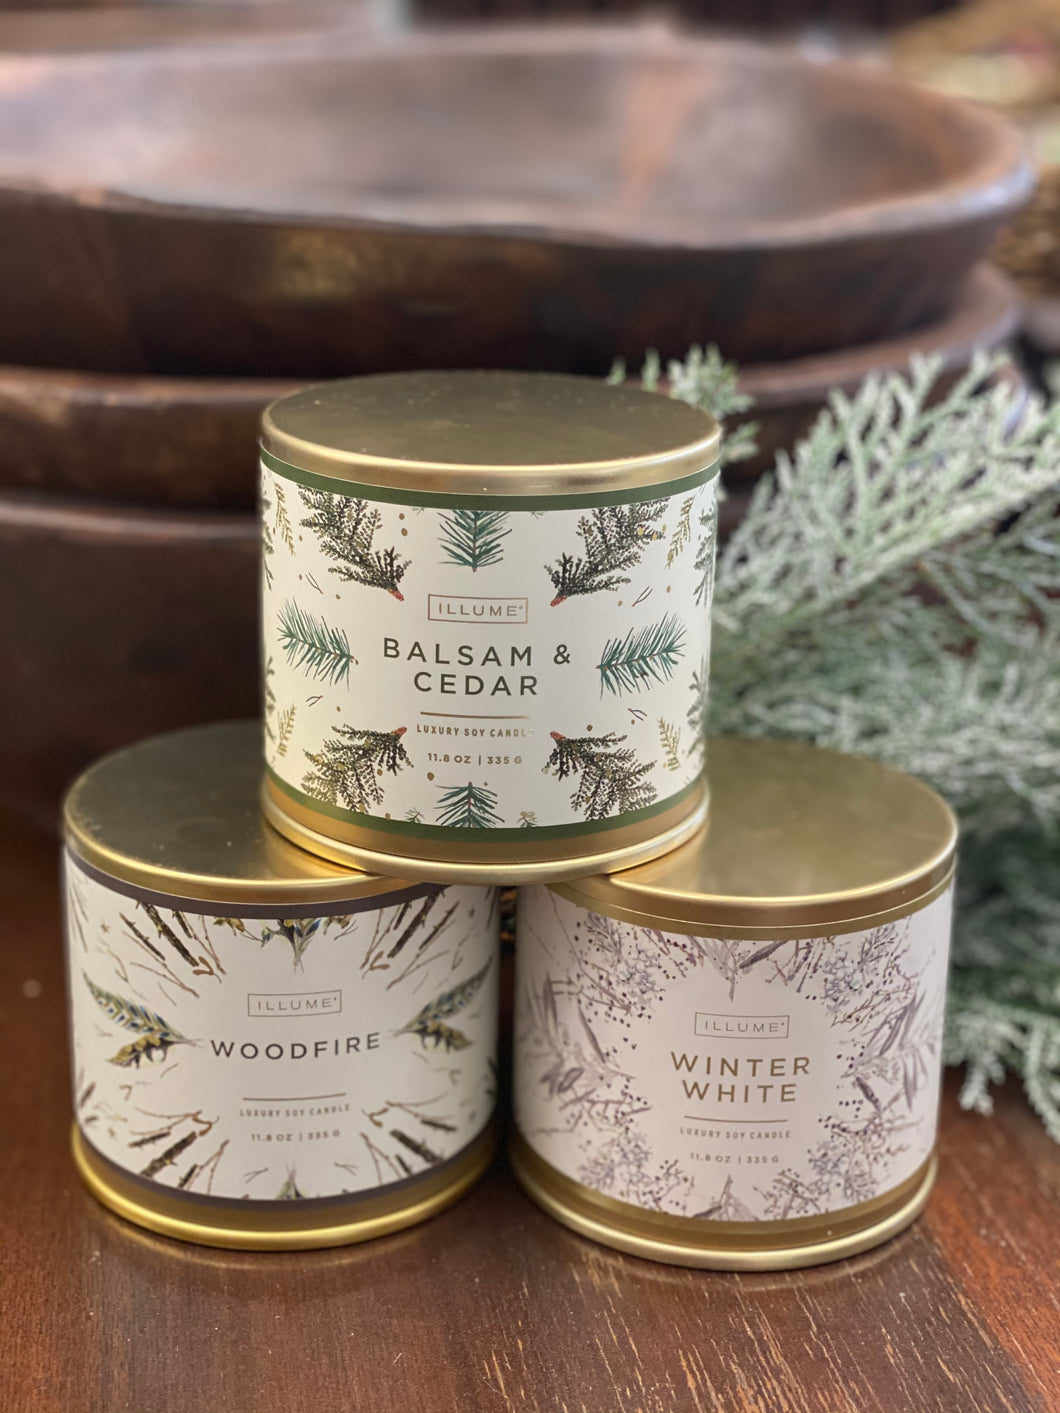 Illume Balsam and Cedar candl